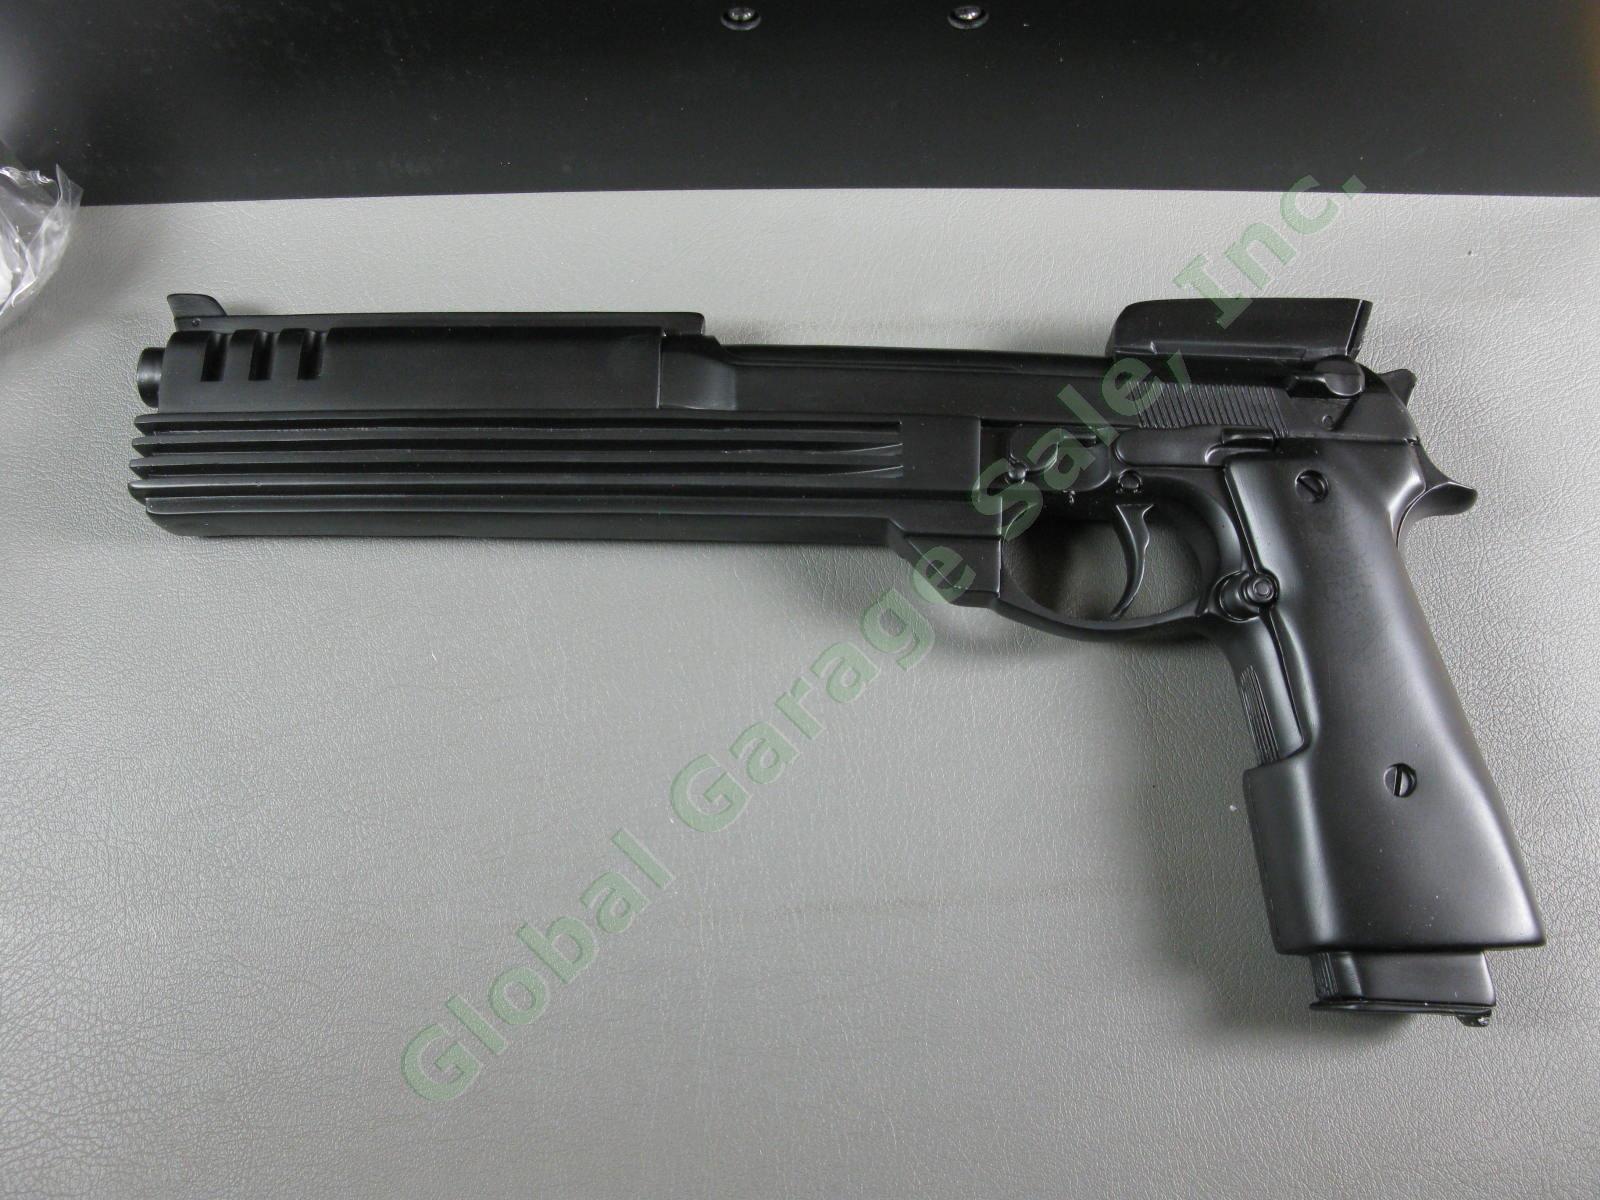 Neca ROBOCOP Beretta M93R Auto-9 Resin Gun Replica Prop Limited Edition 696/1000 6